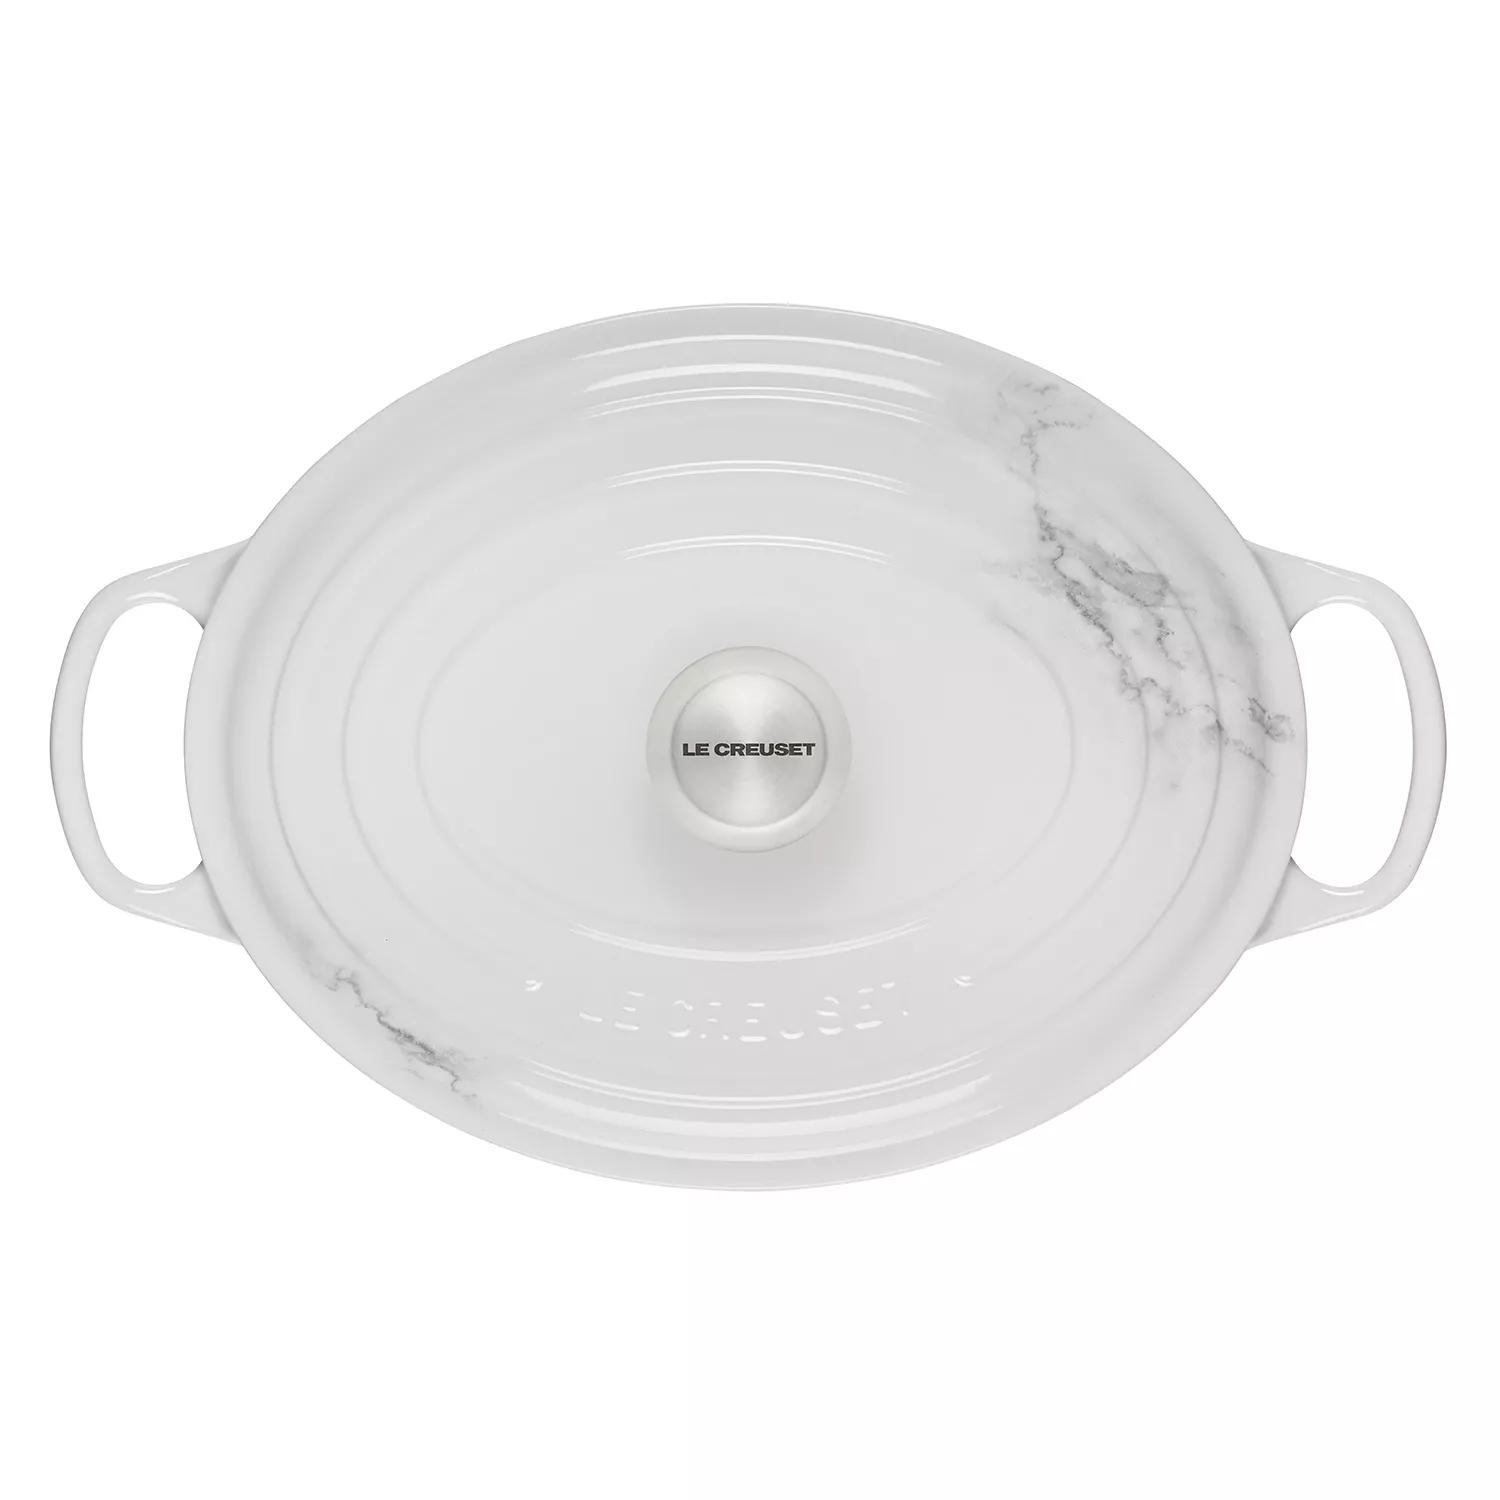 Le Creuset Signature 6.75 Quart Oval Dutch Oven | Marble